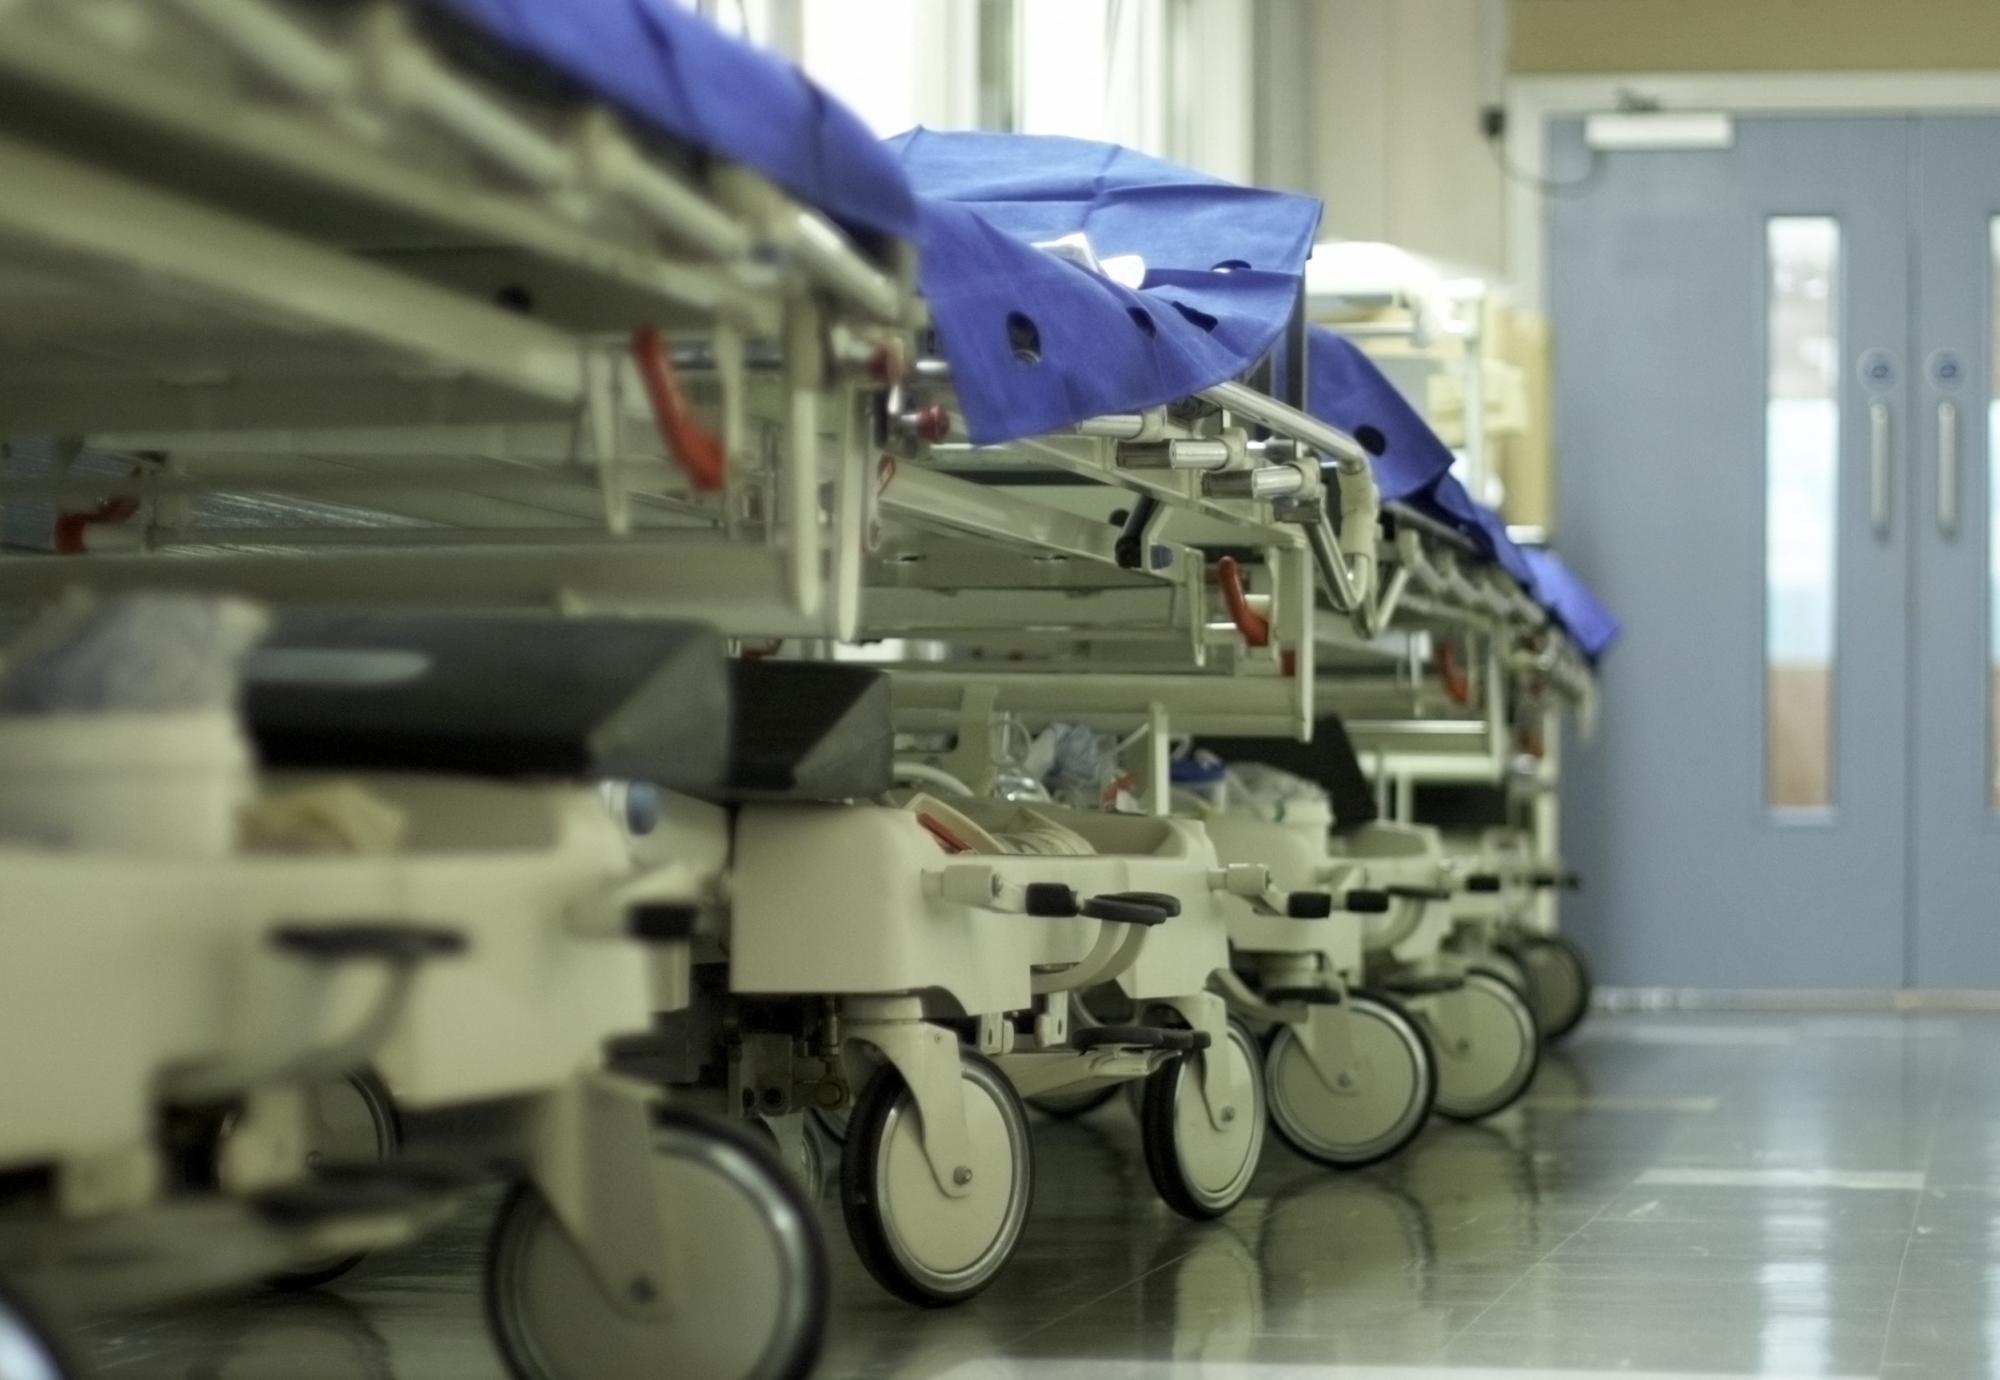 Hospital beds in a corridor